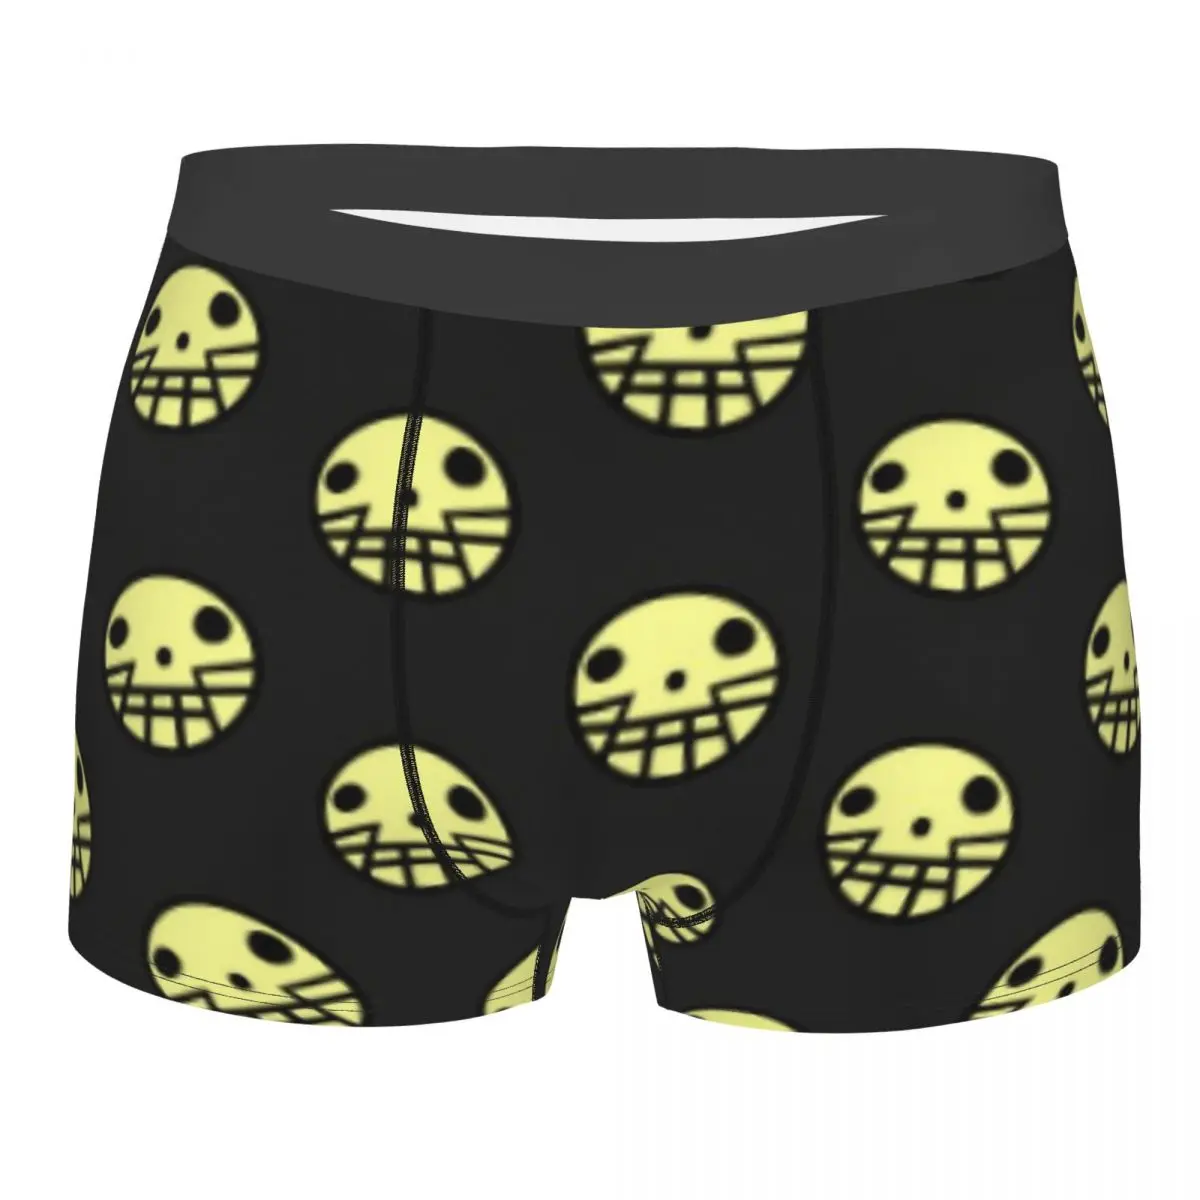 

Duncan Skull Emblem Total Drama Chef Hatchet Animated Underpants Breathbale Panties Men's Underwear Print Shorts Boxer Briefs